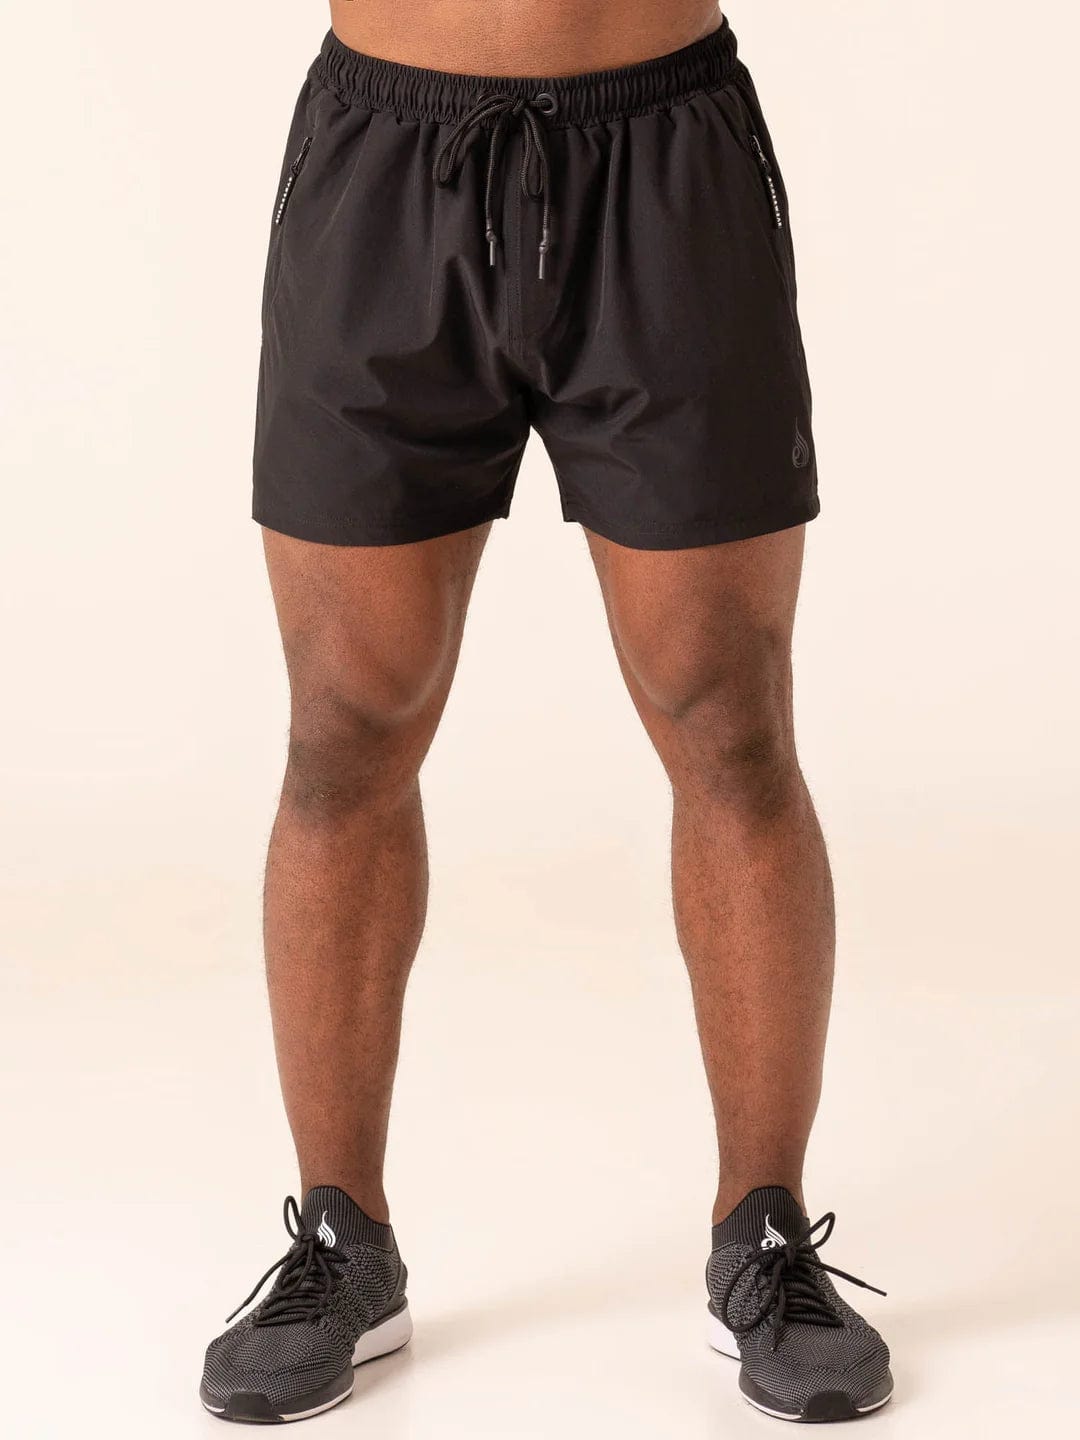 Ryderwear Adapt 5" Training Short Shorts